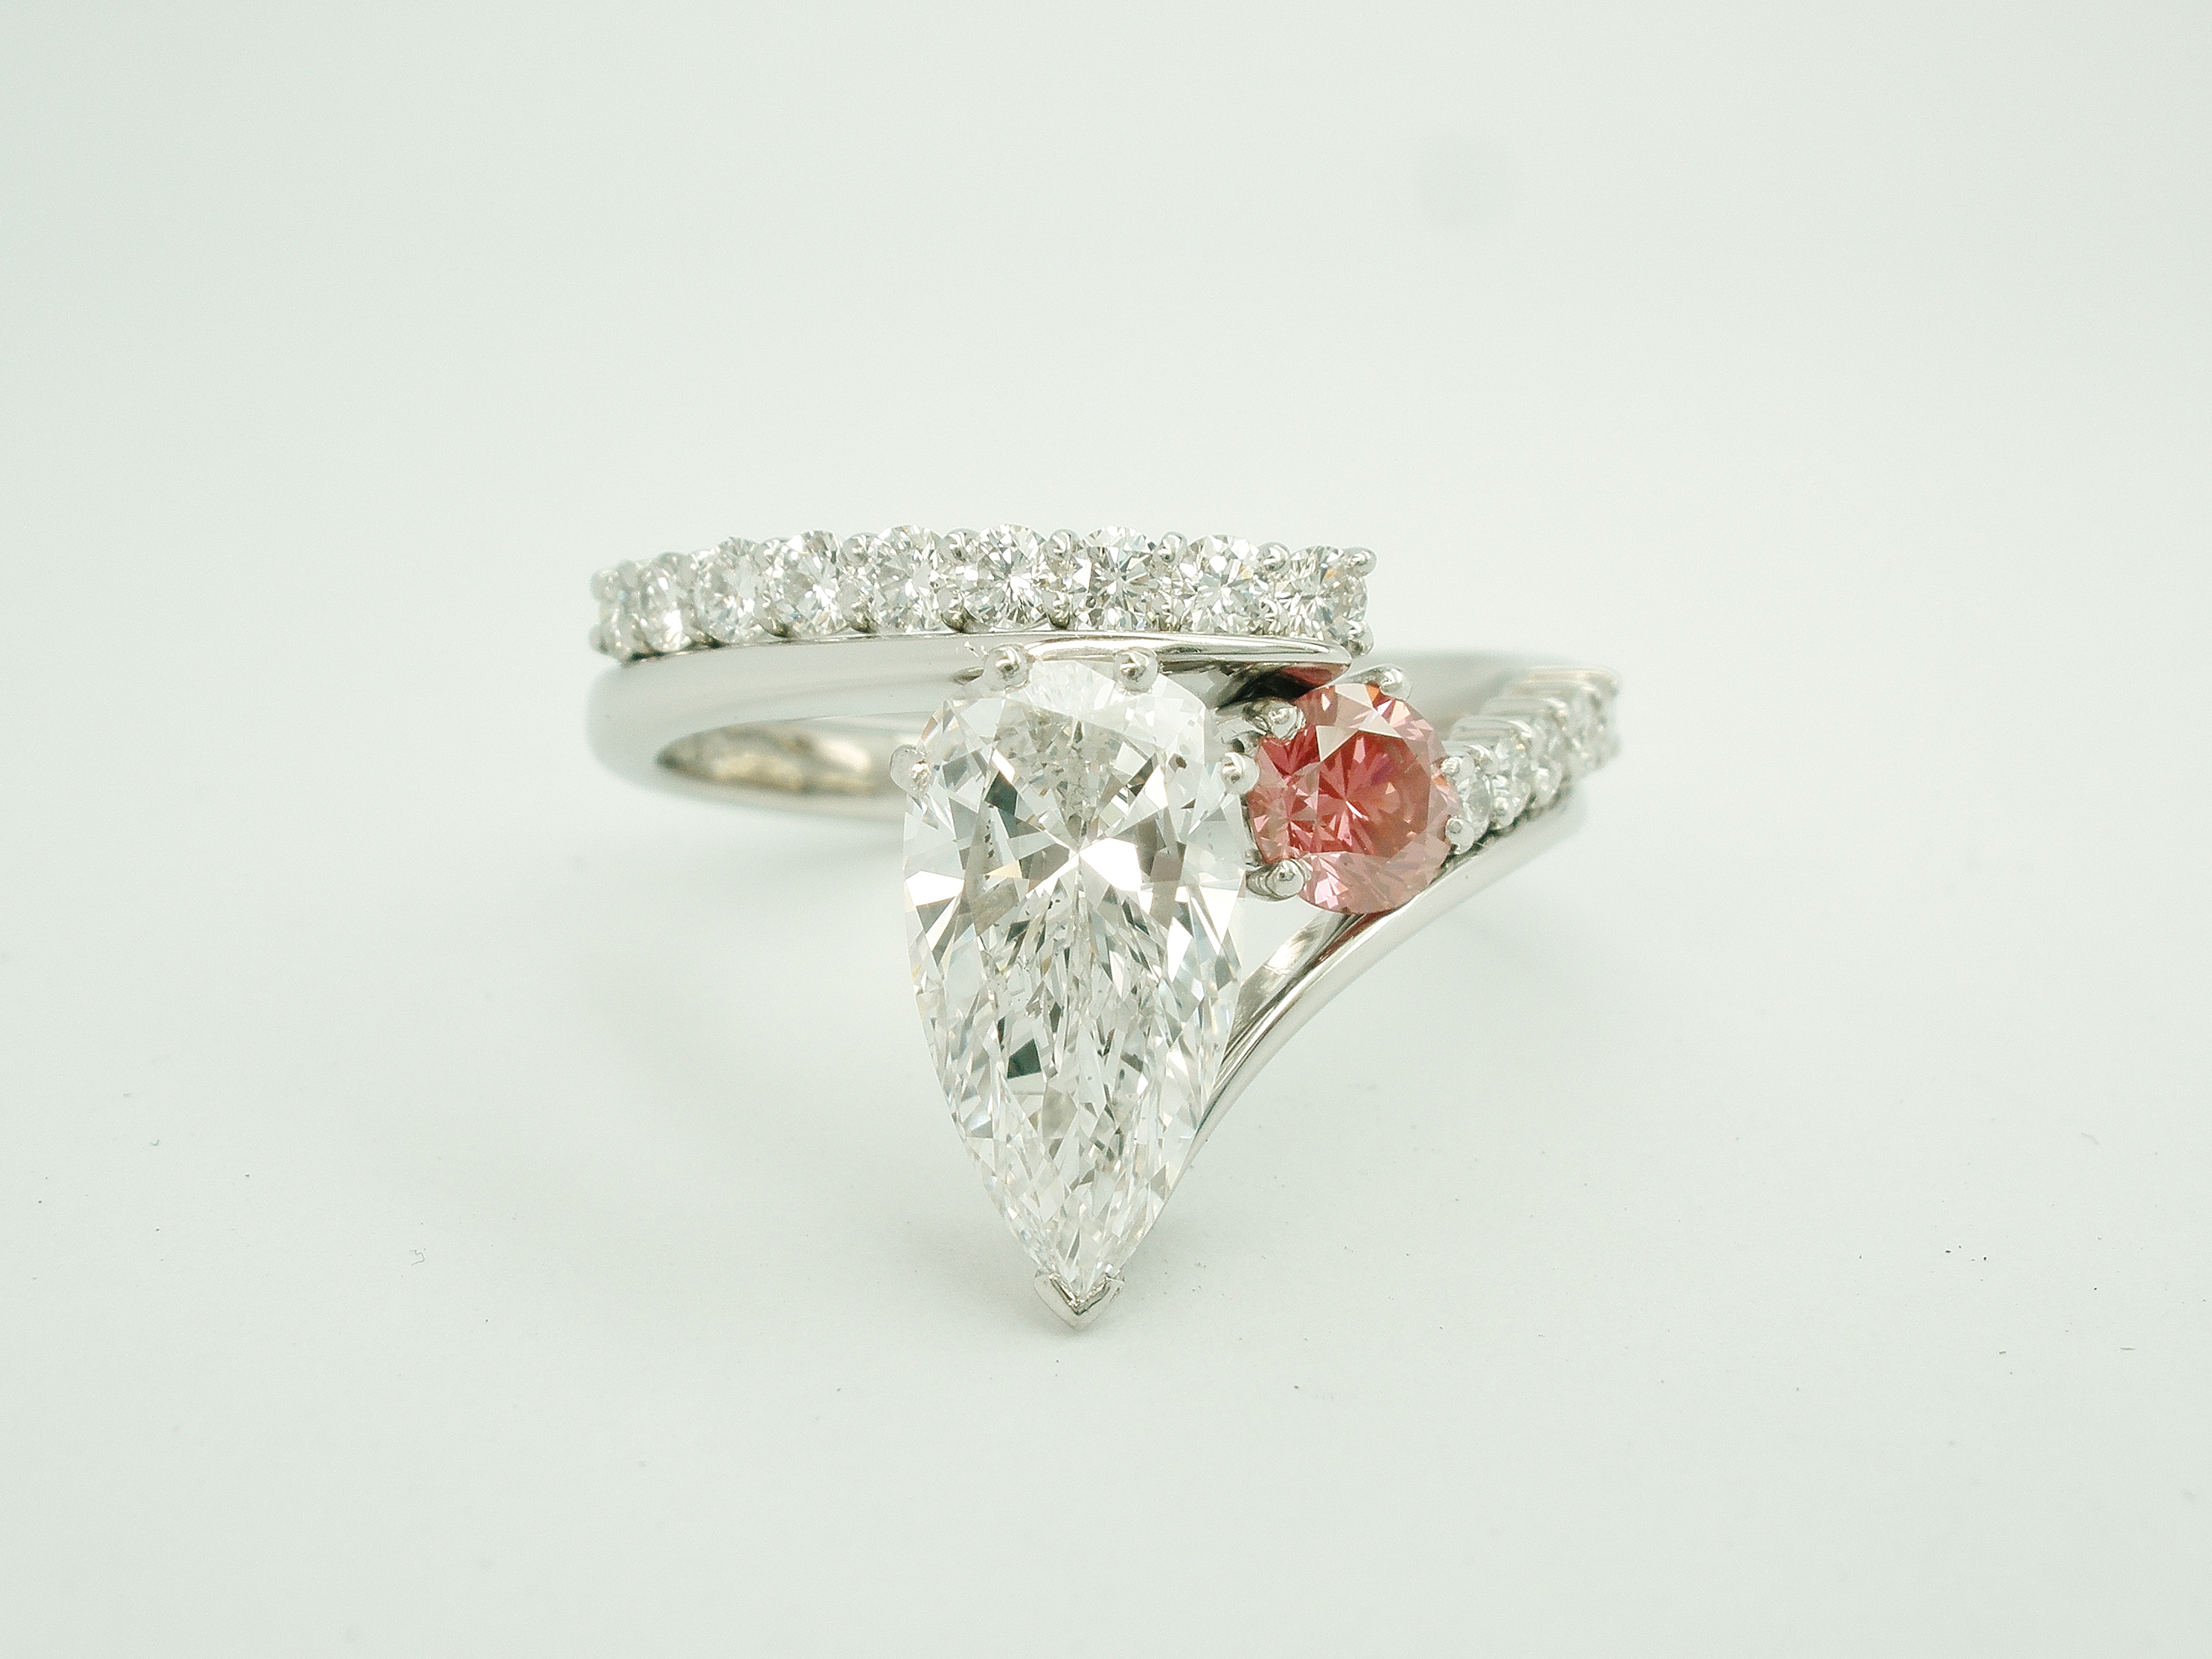 Pink round brilliant cut diamond & white diamond wire set platinum wedding ring shaped to interlock with a single diamond pear wishbone cross-over engagement ring.